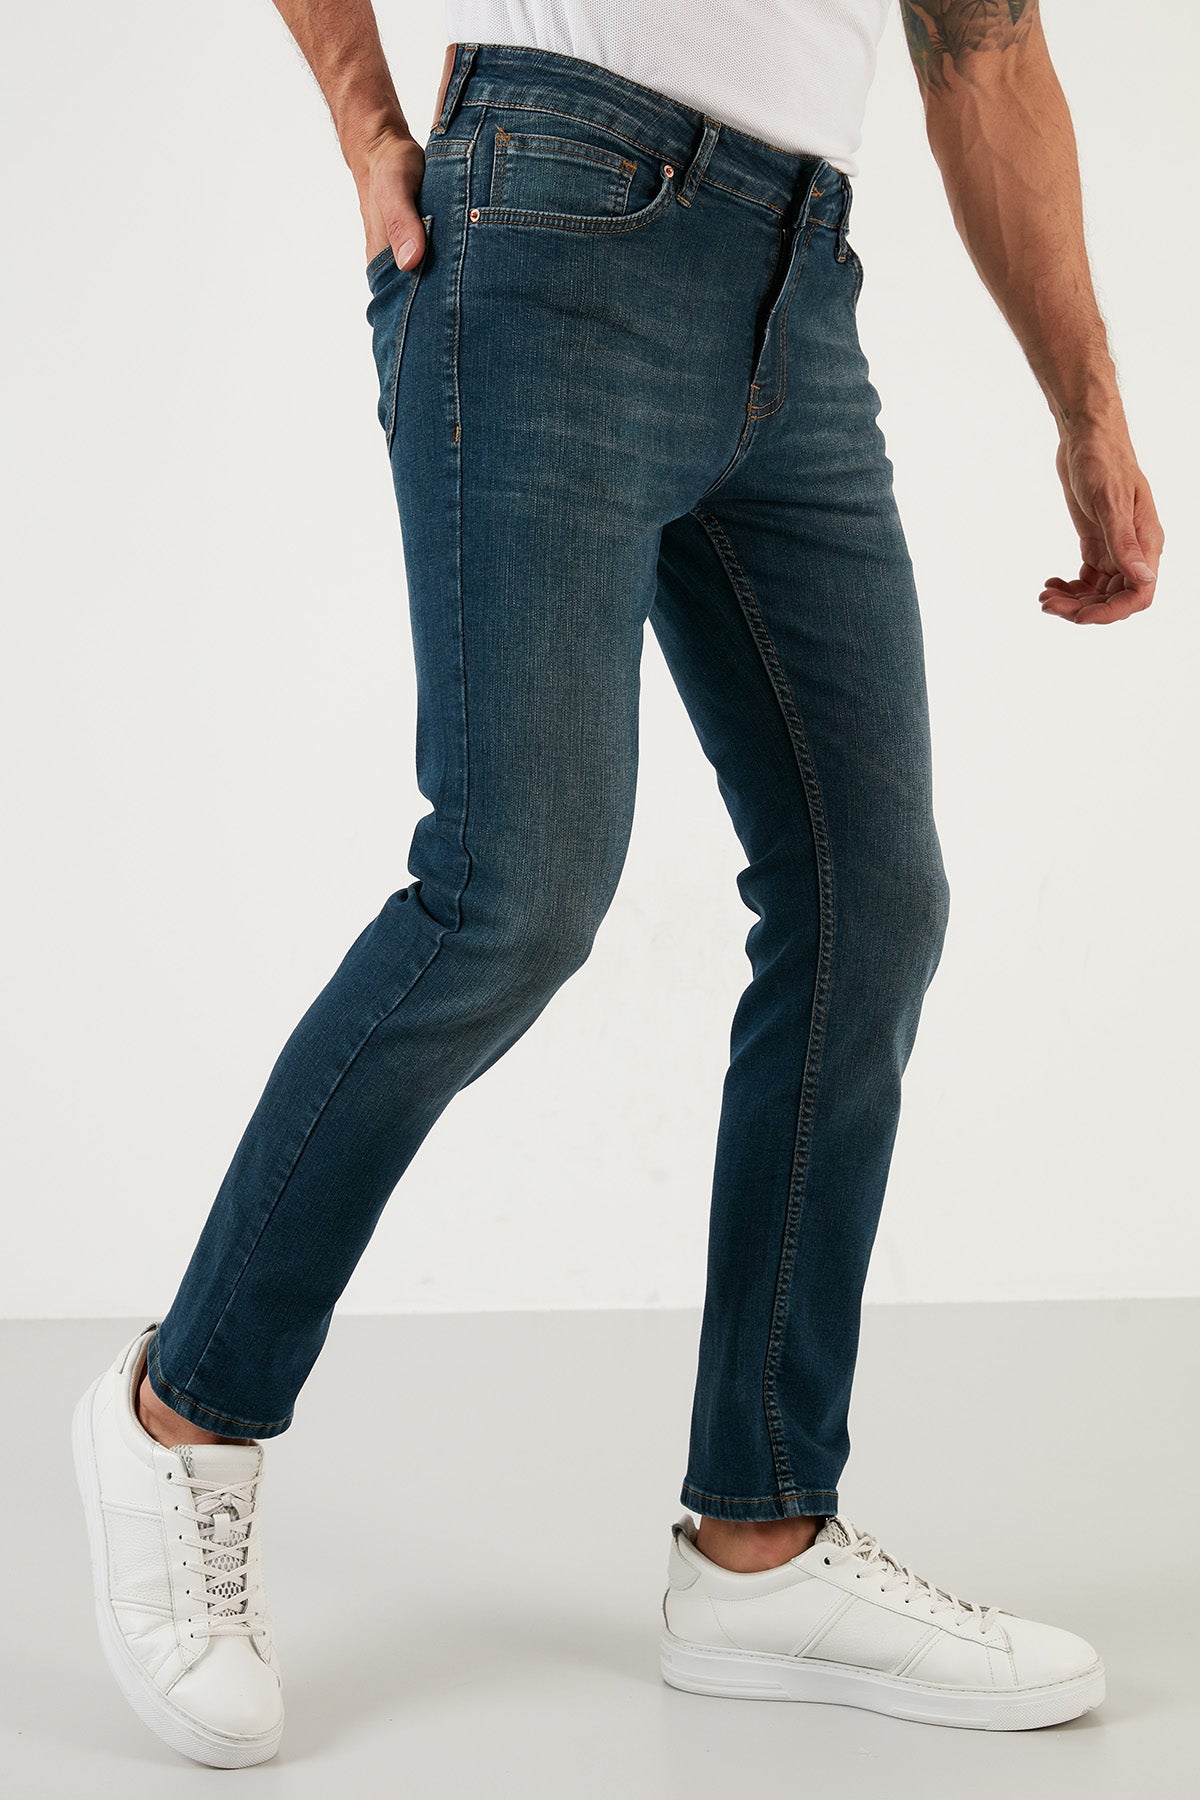 Buratti Cotton Normal Waist Slim Fit Piggy Leg Jeans Men Denim Trousers